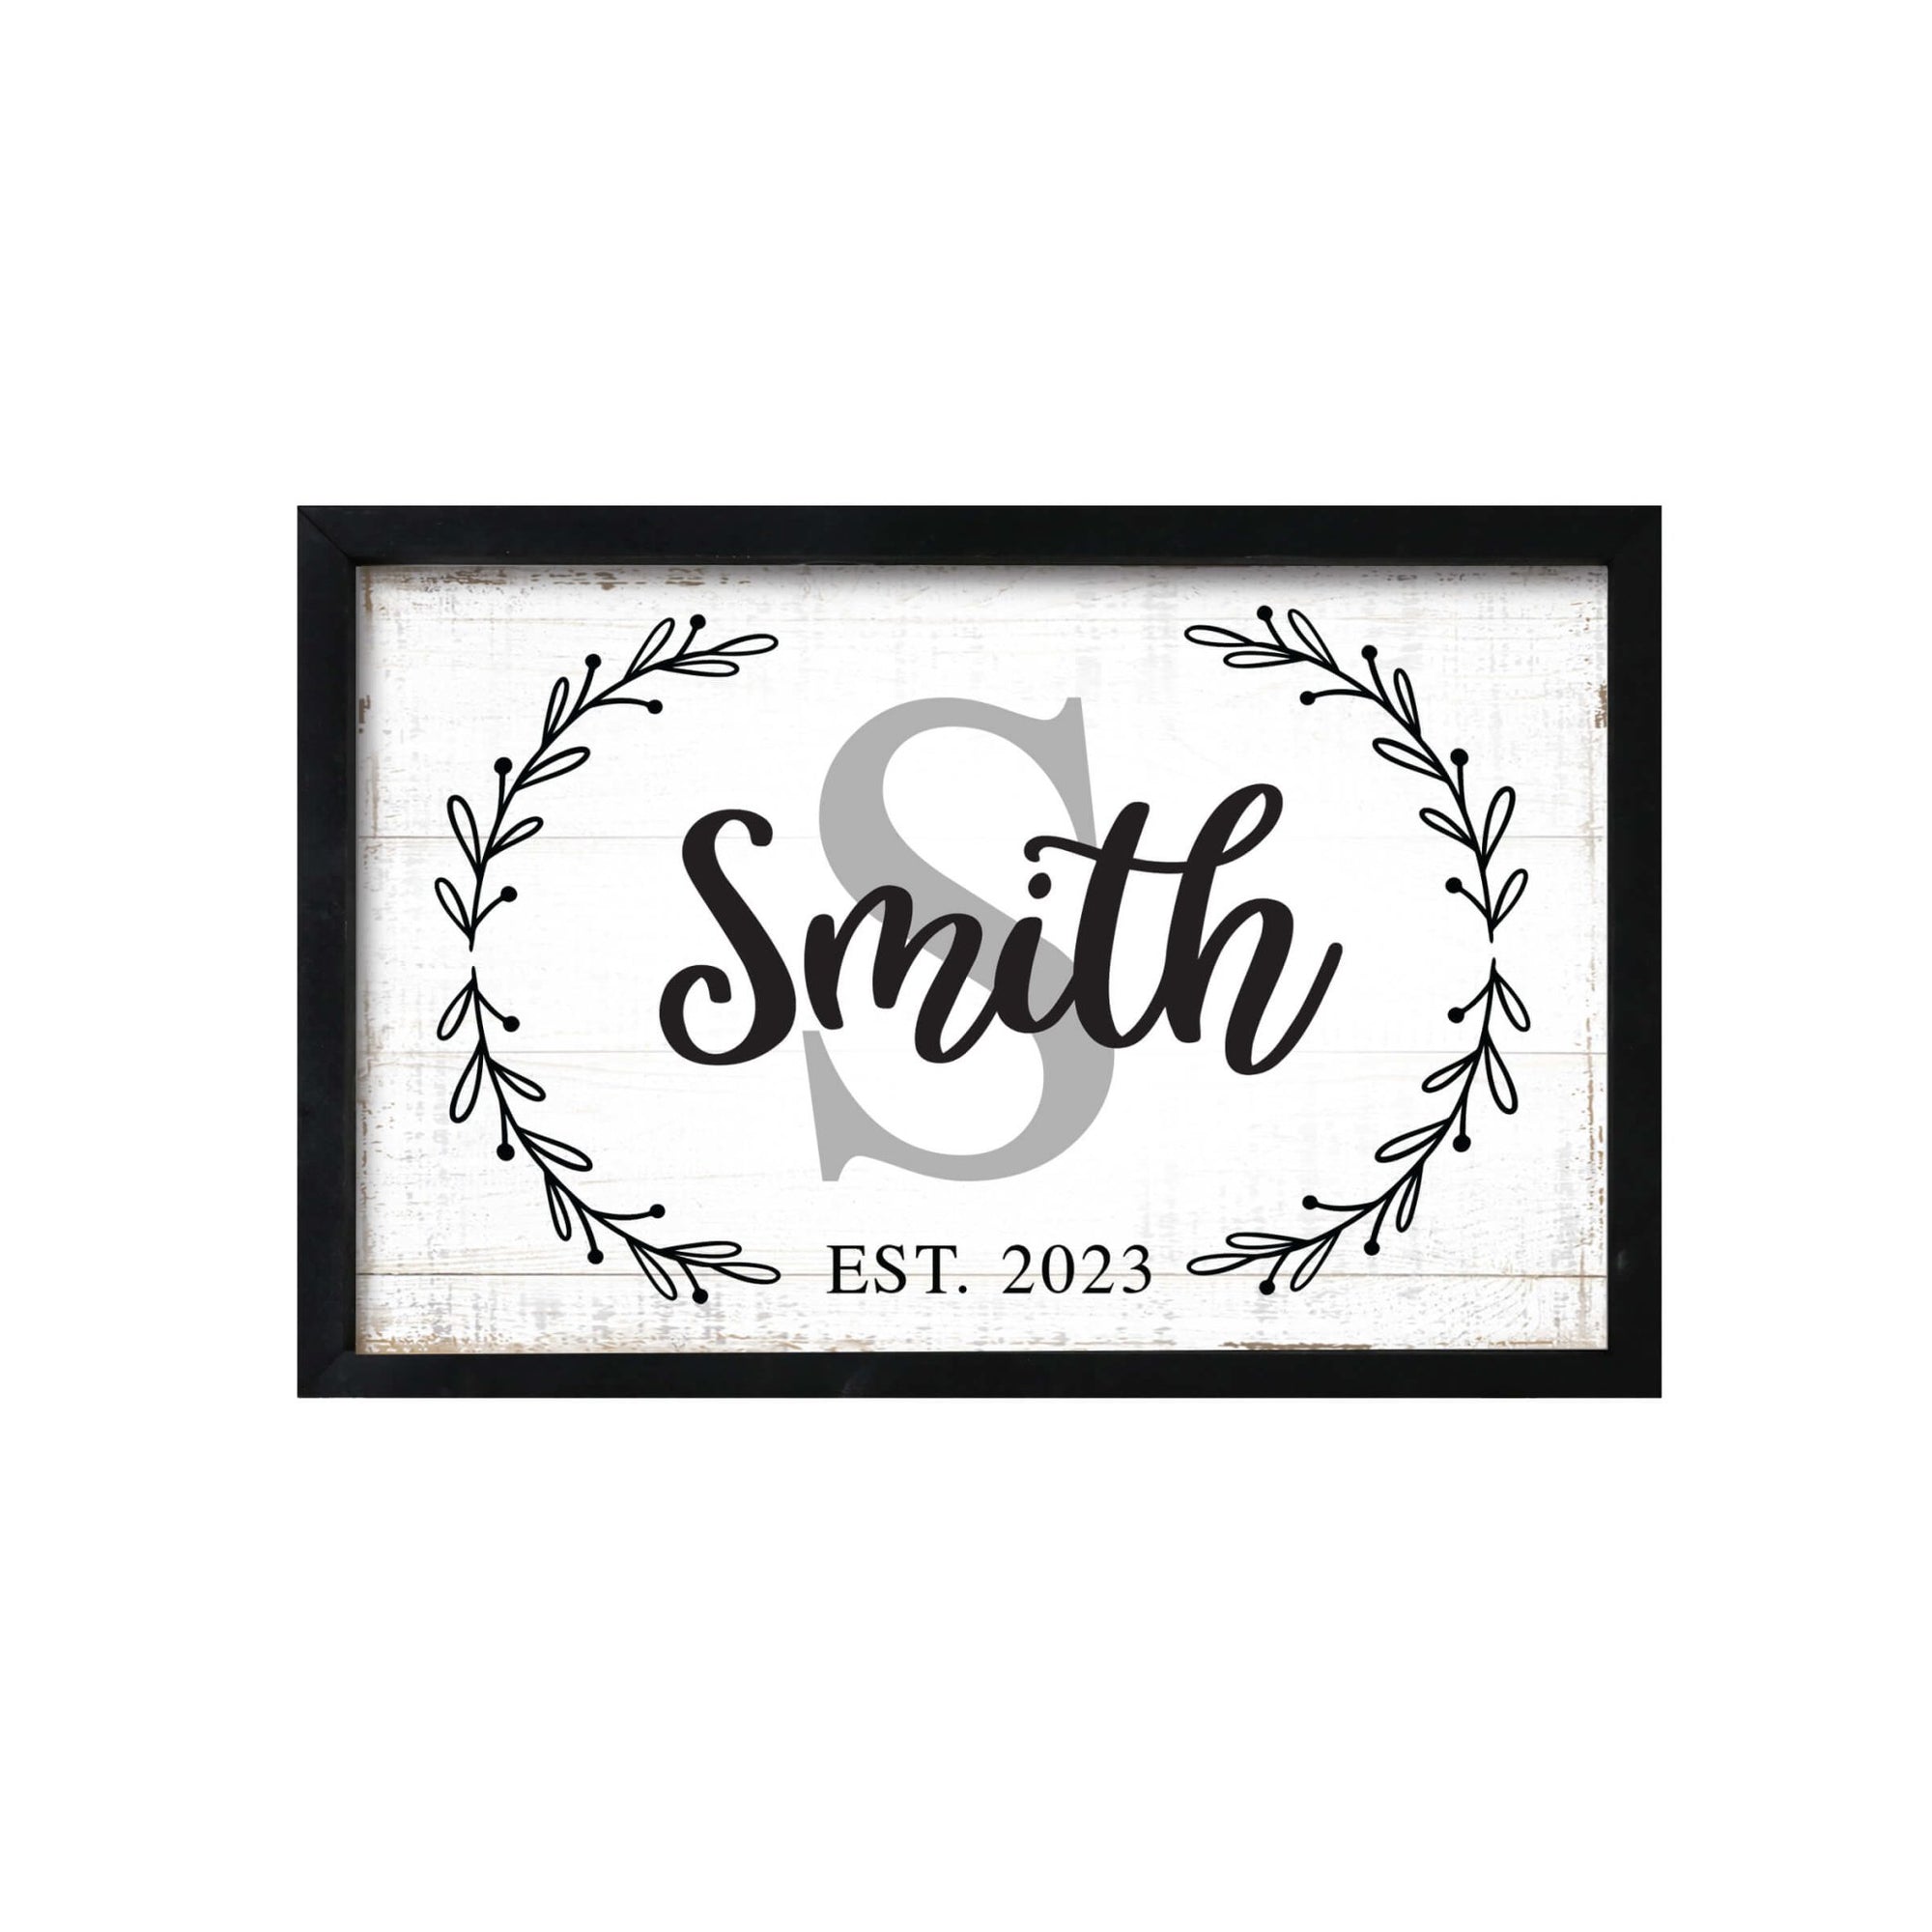 Customized Home Décor Framed Shadow Box With Family Name - Smith